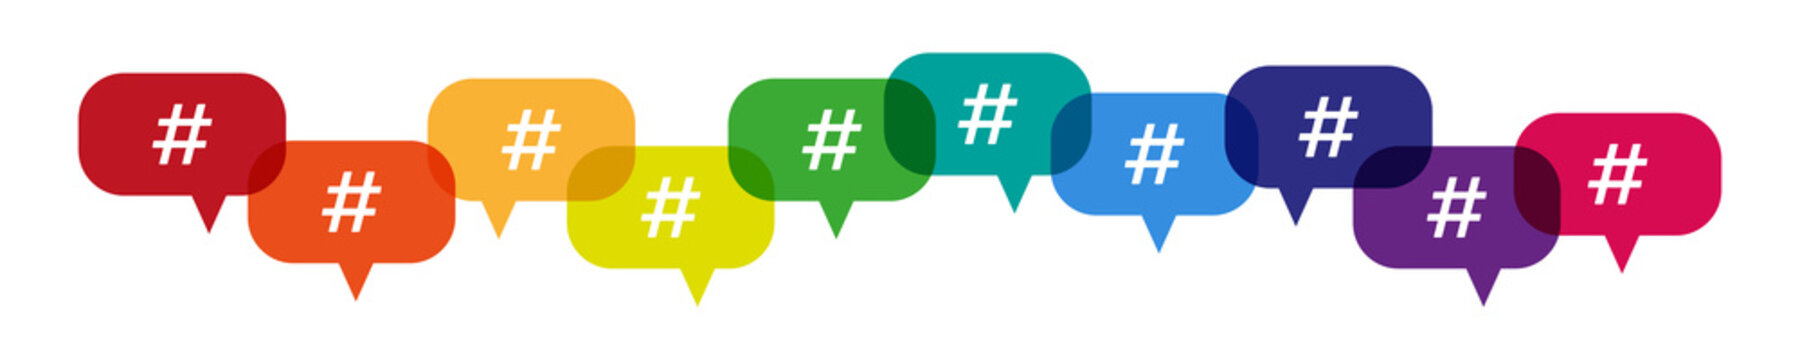 hashtag banner speech bubbles social media comcept